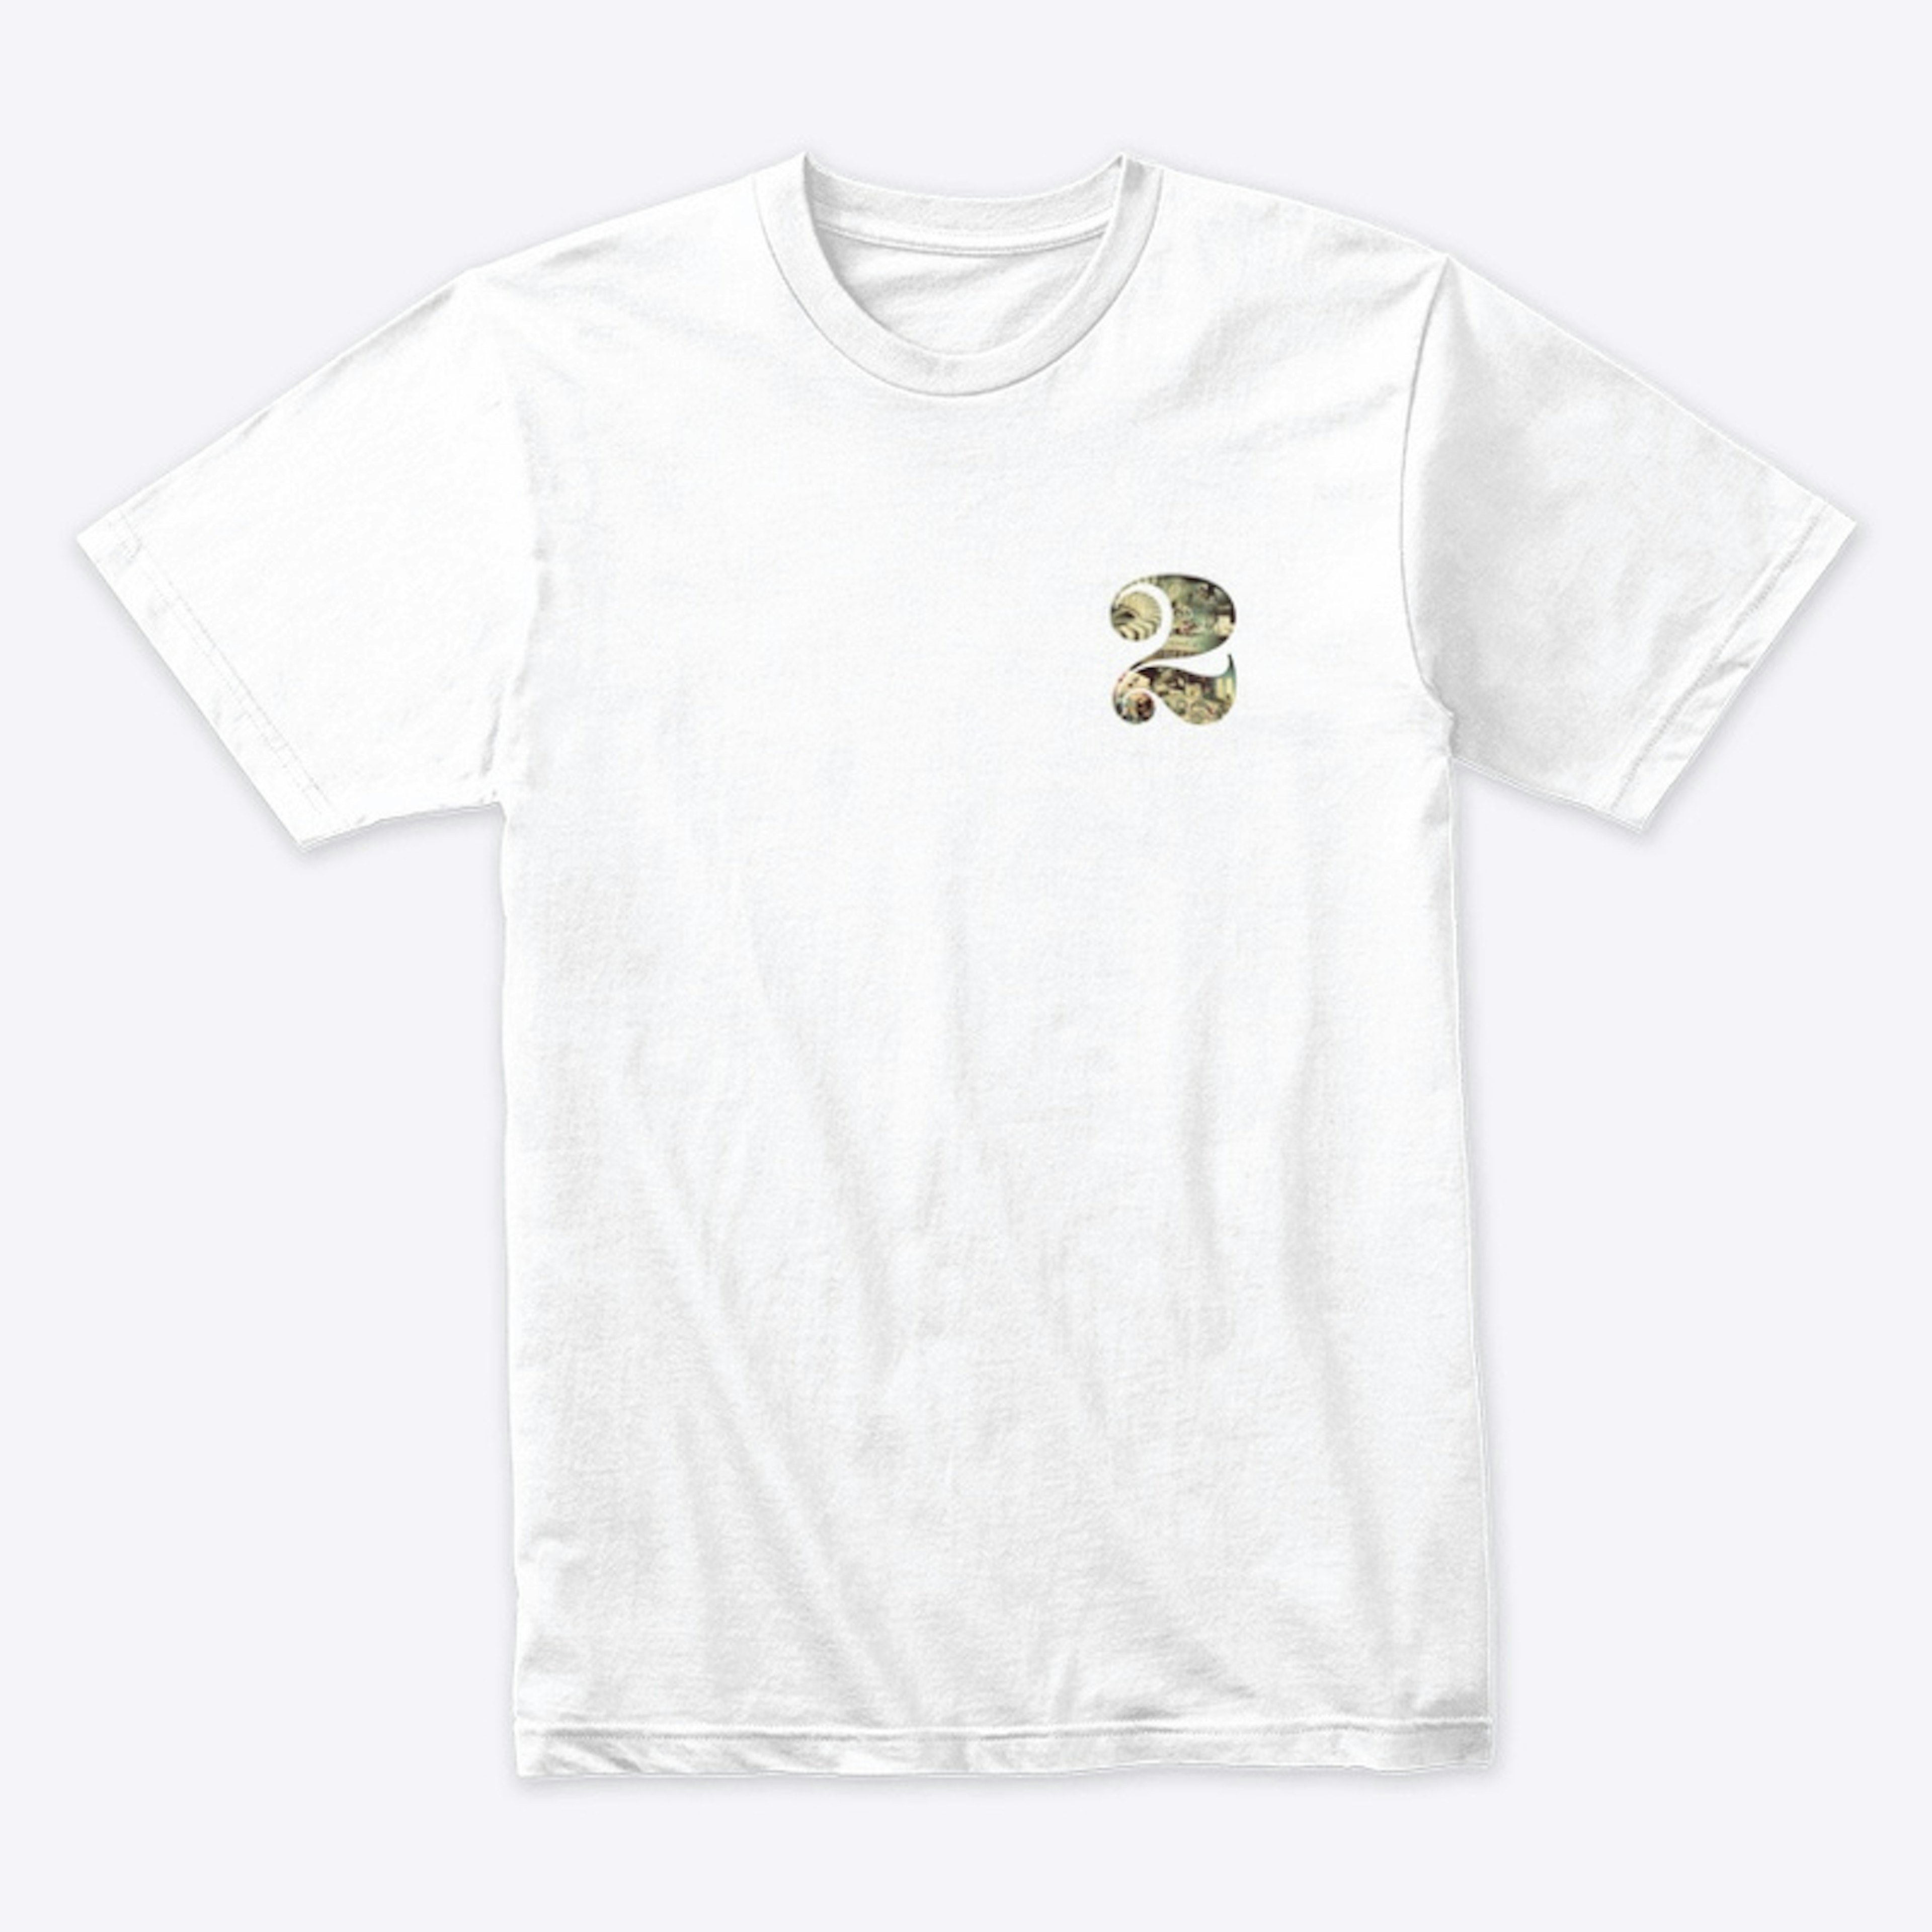 $2 logo tops - white